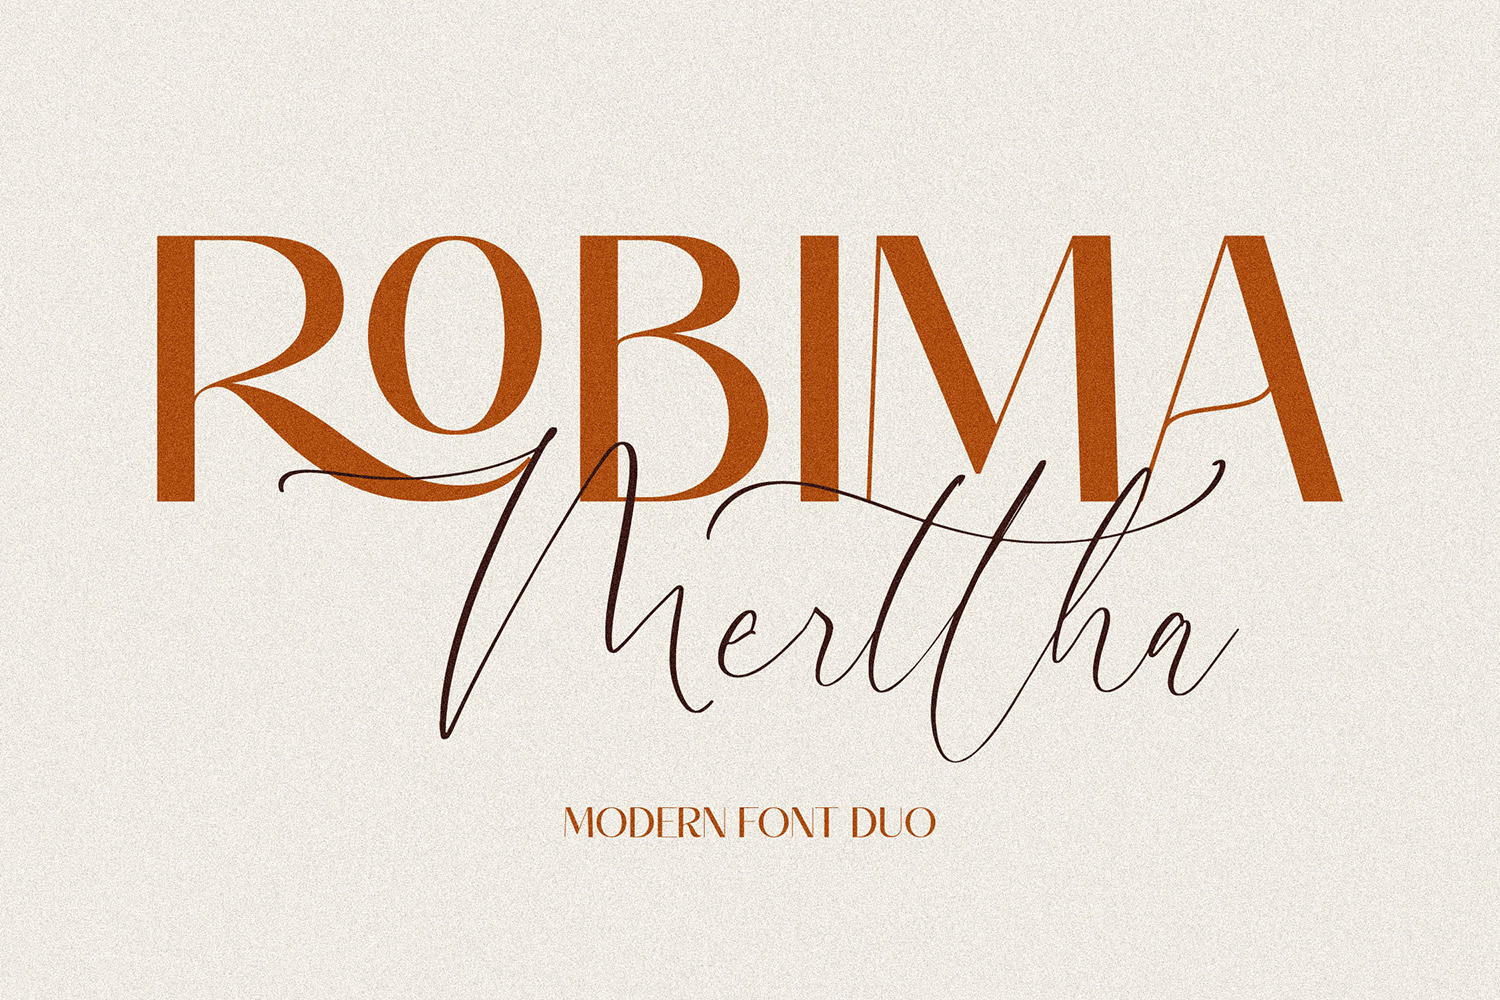 Robima Merttha Free Font